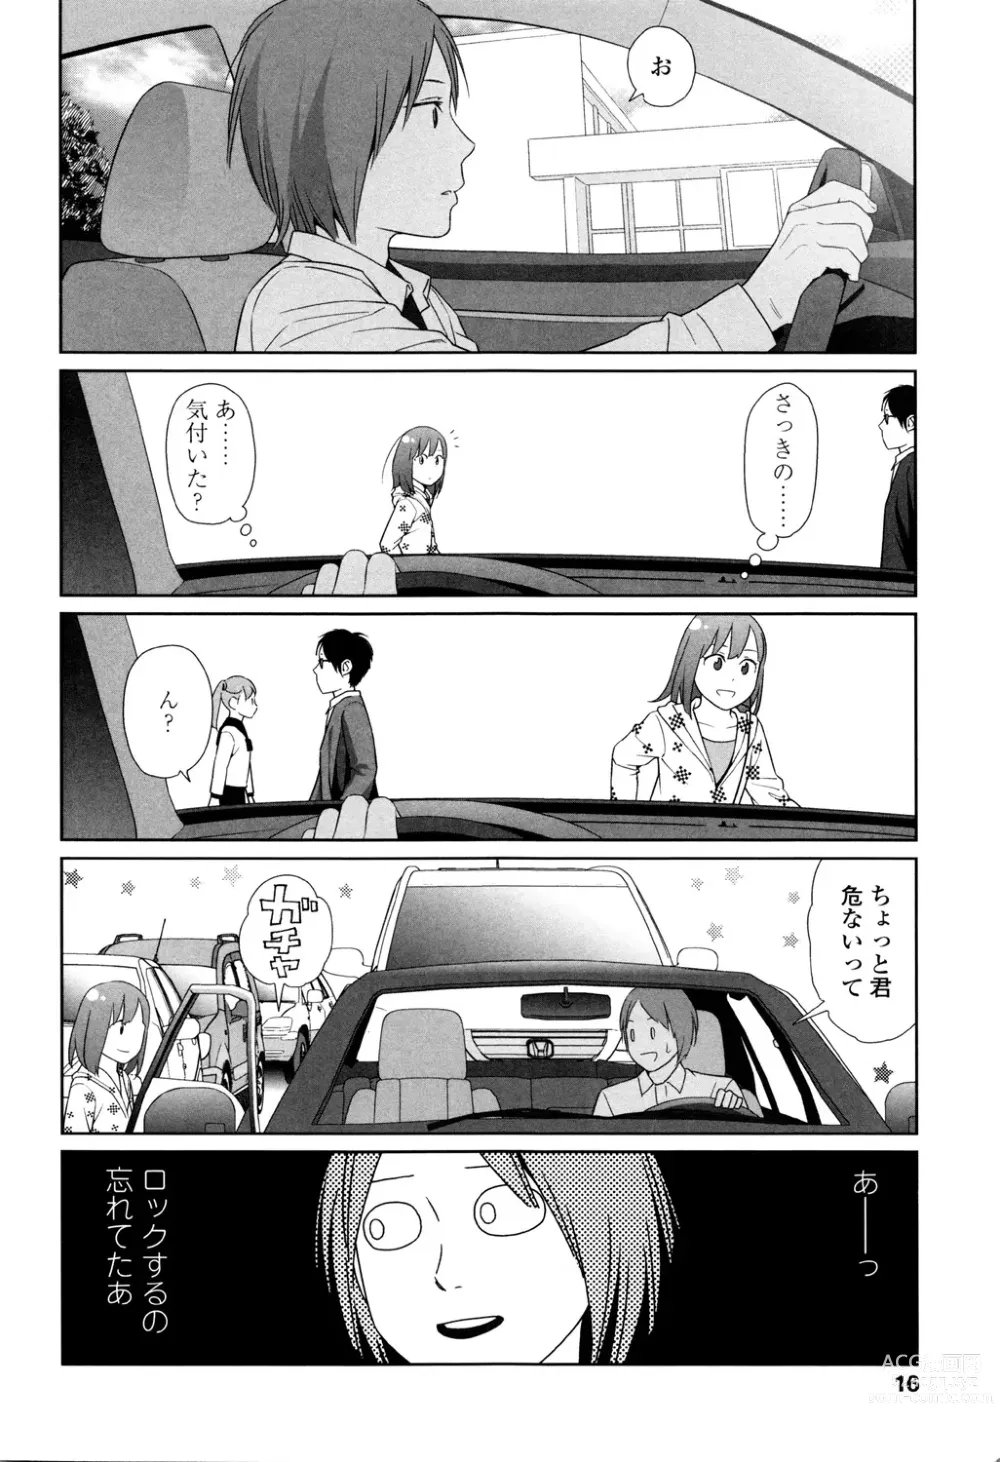 Page 14 of manga Nymphodelic